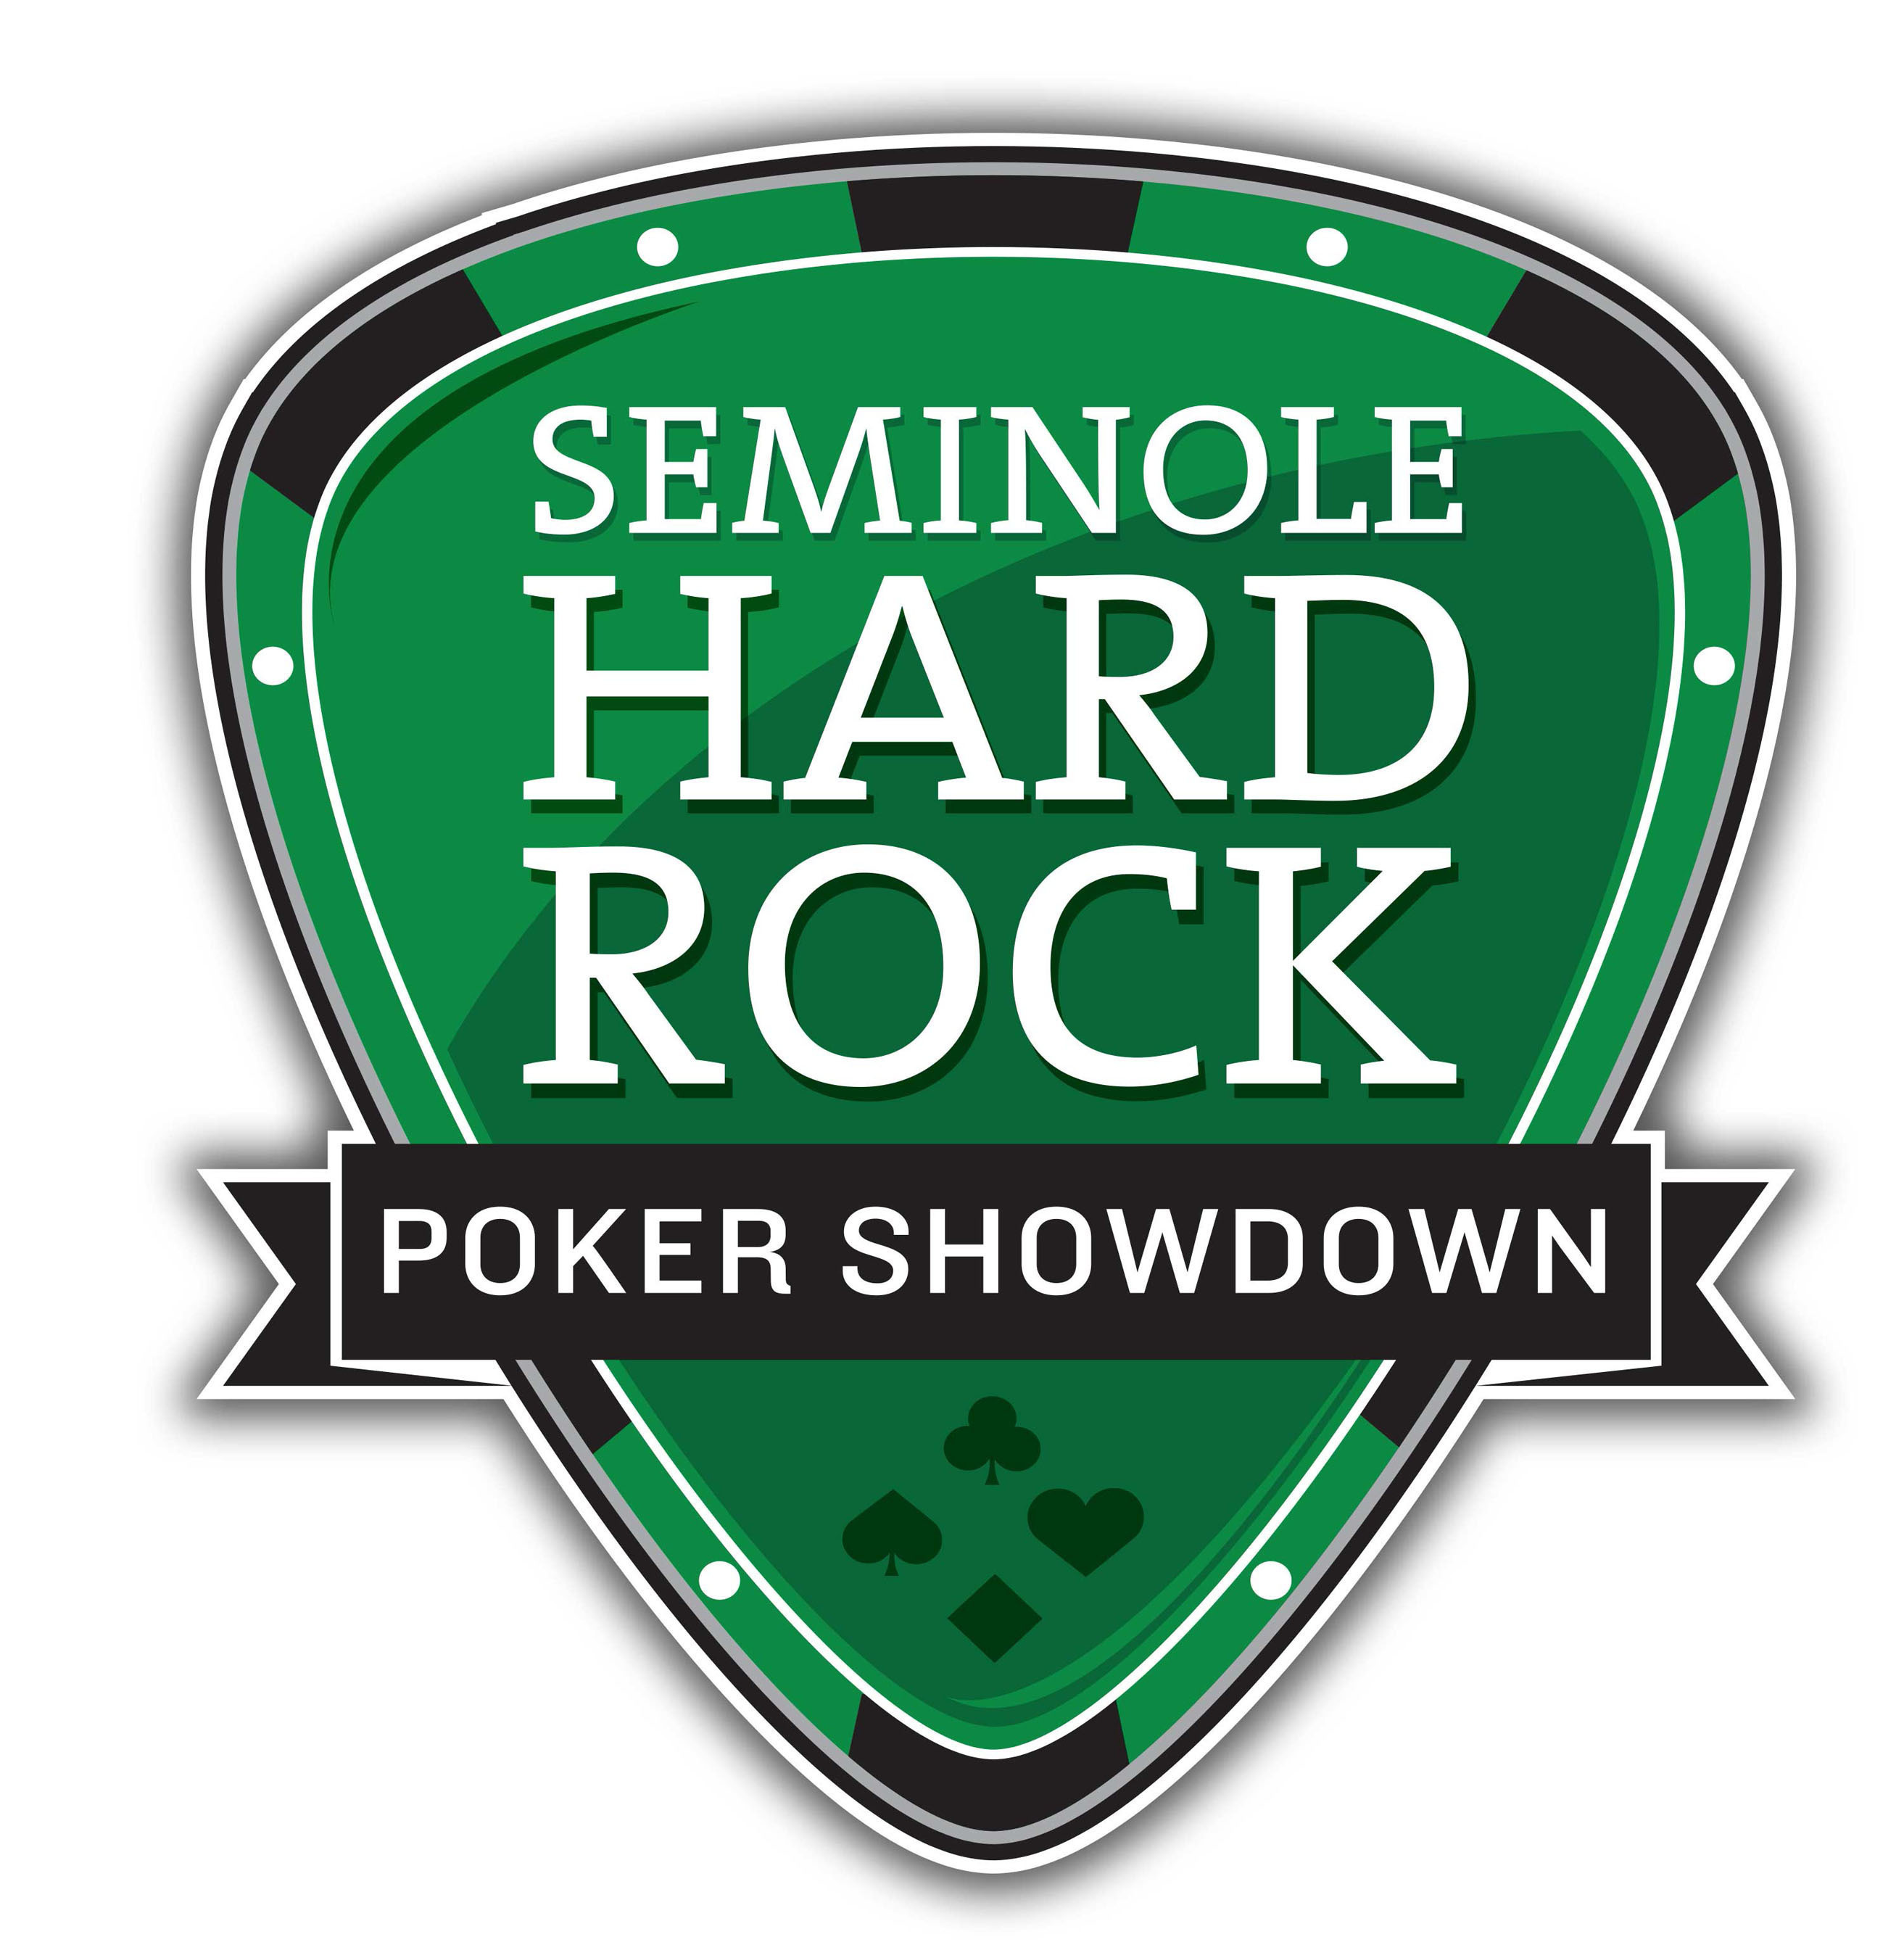 Seminole Hard Rock Poker Showdown logo. (PRNewsFoto/Seminole Hard Rock Hotel & Casino Hollywood) (PRNewsFoto/SEMINOLE HARD ROCK HOTEL & CA...)